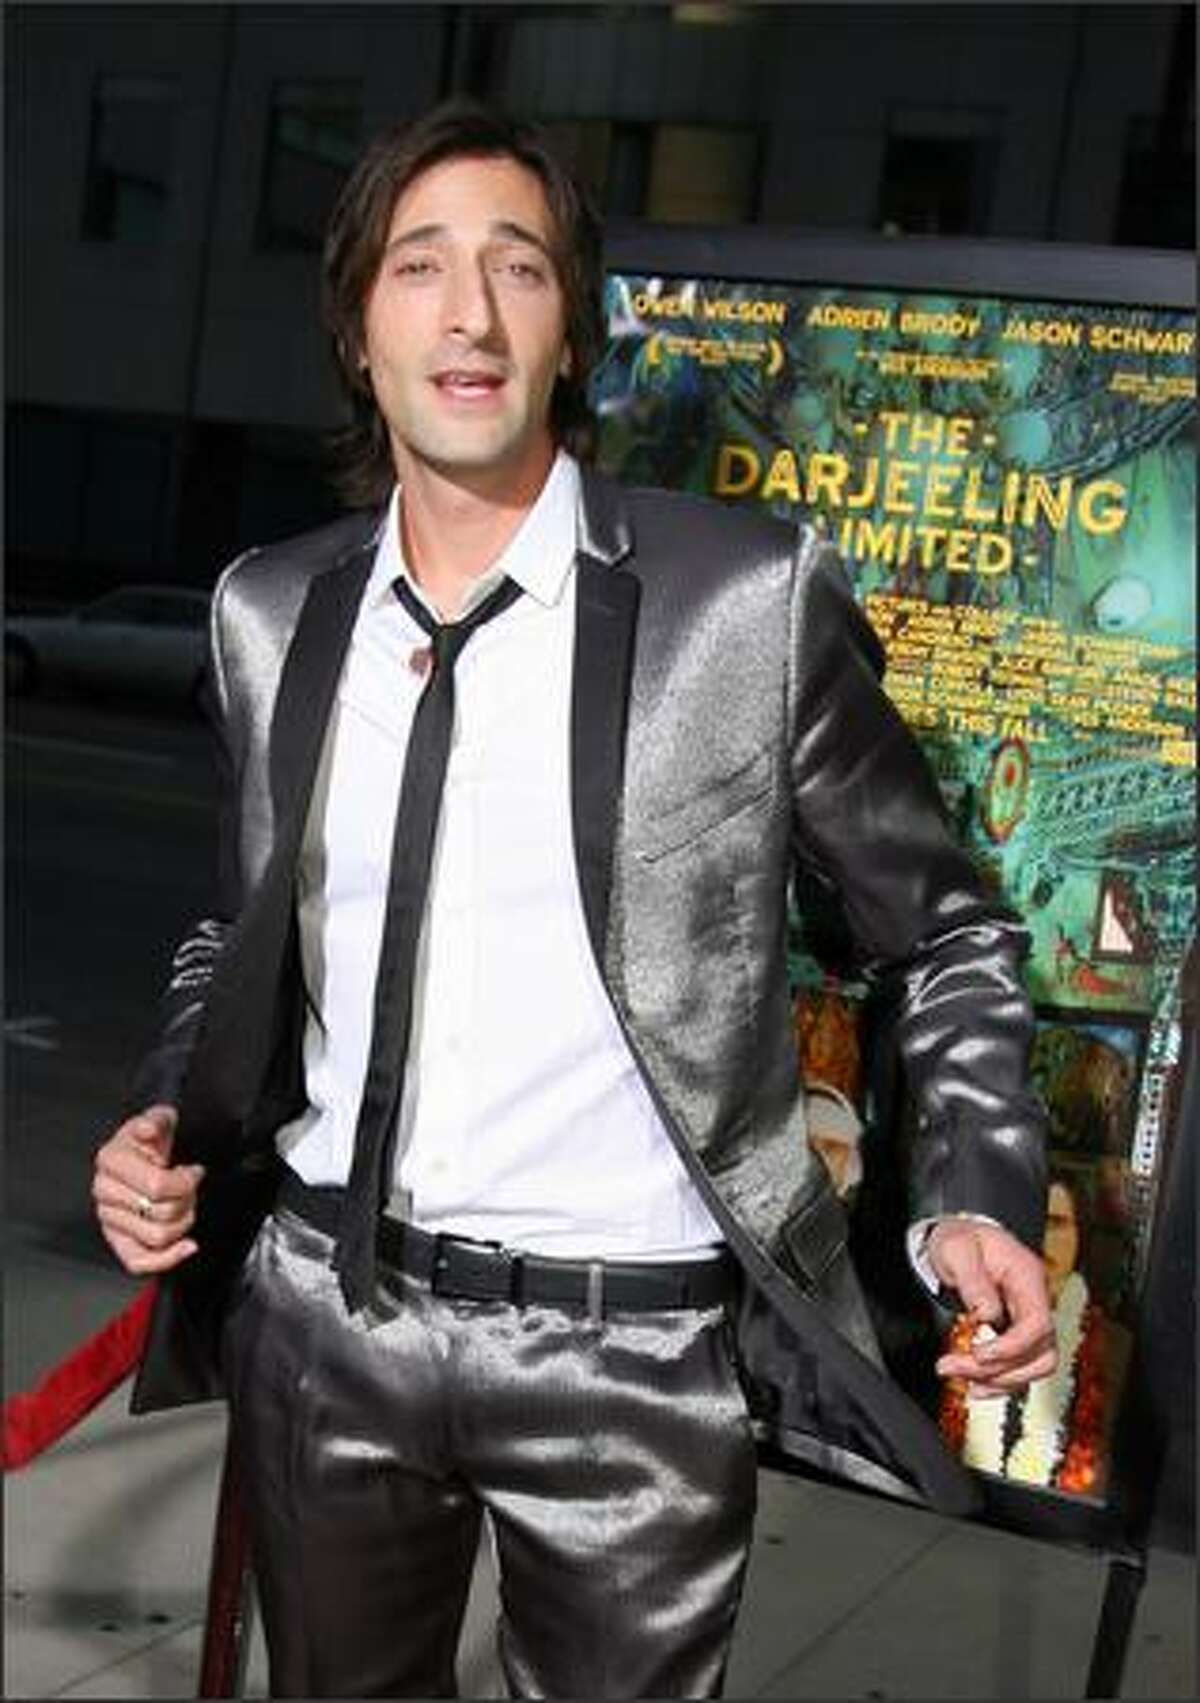 The leather belt of Adrien Brody in aboard the Darjeeling Limited